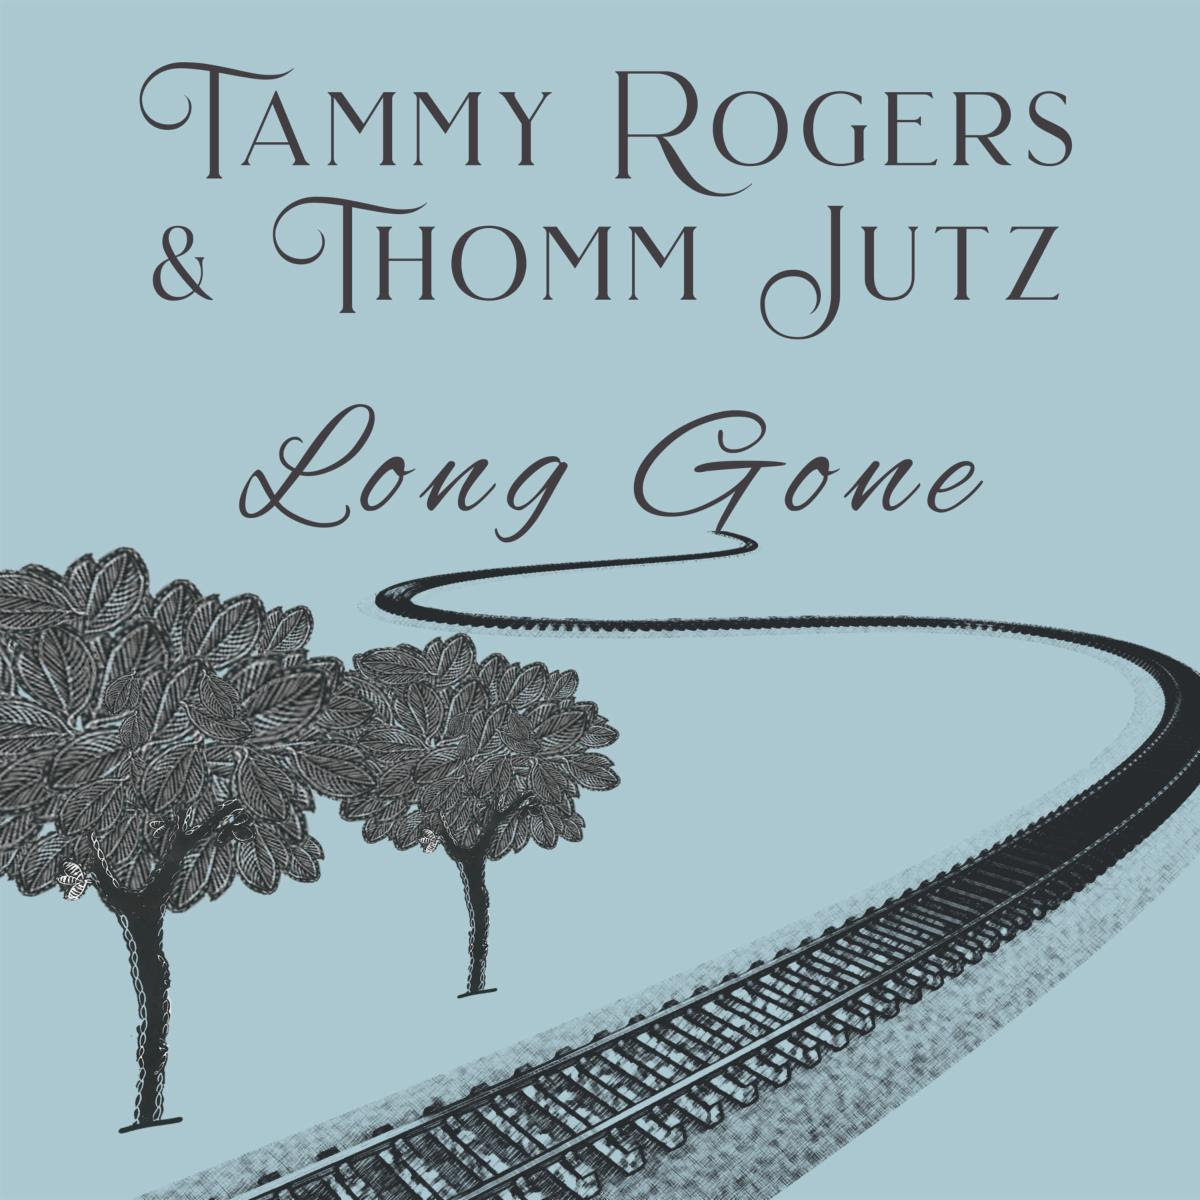 Tammy Rogers and Thomm Jutz